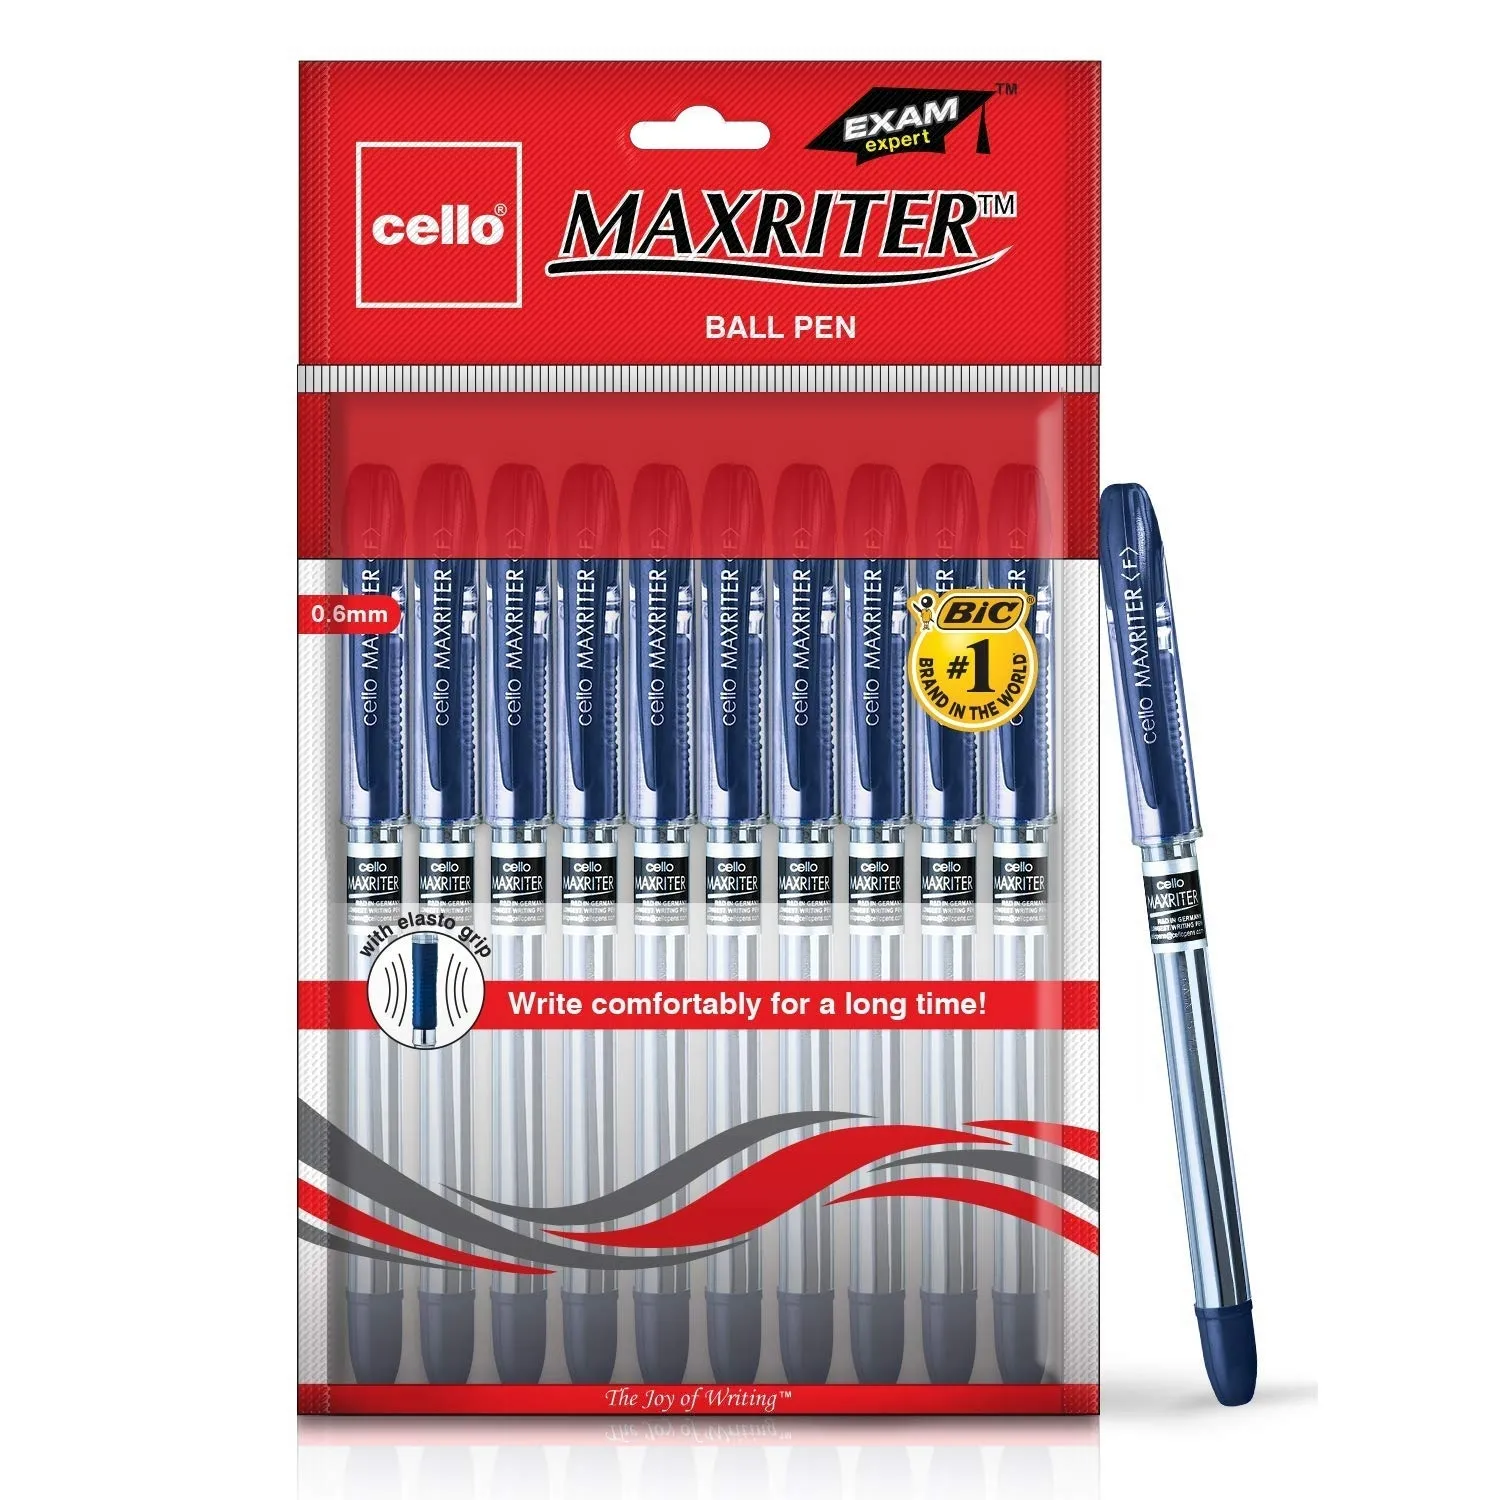 Cello Maxriter 0.6 mm Ball Pen Blue Pen Exam Expert Pack of 10 Pen